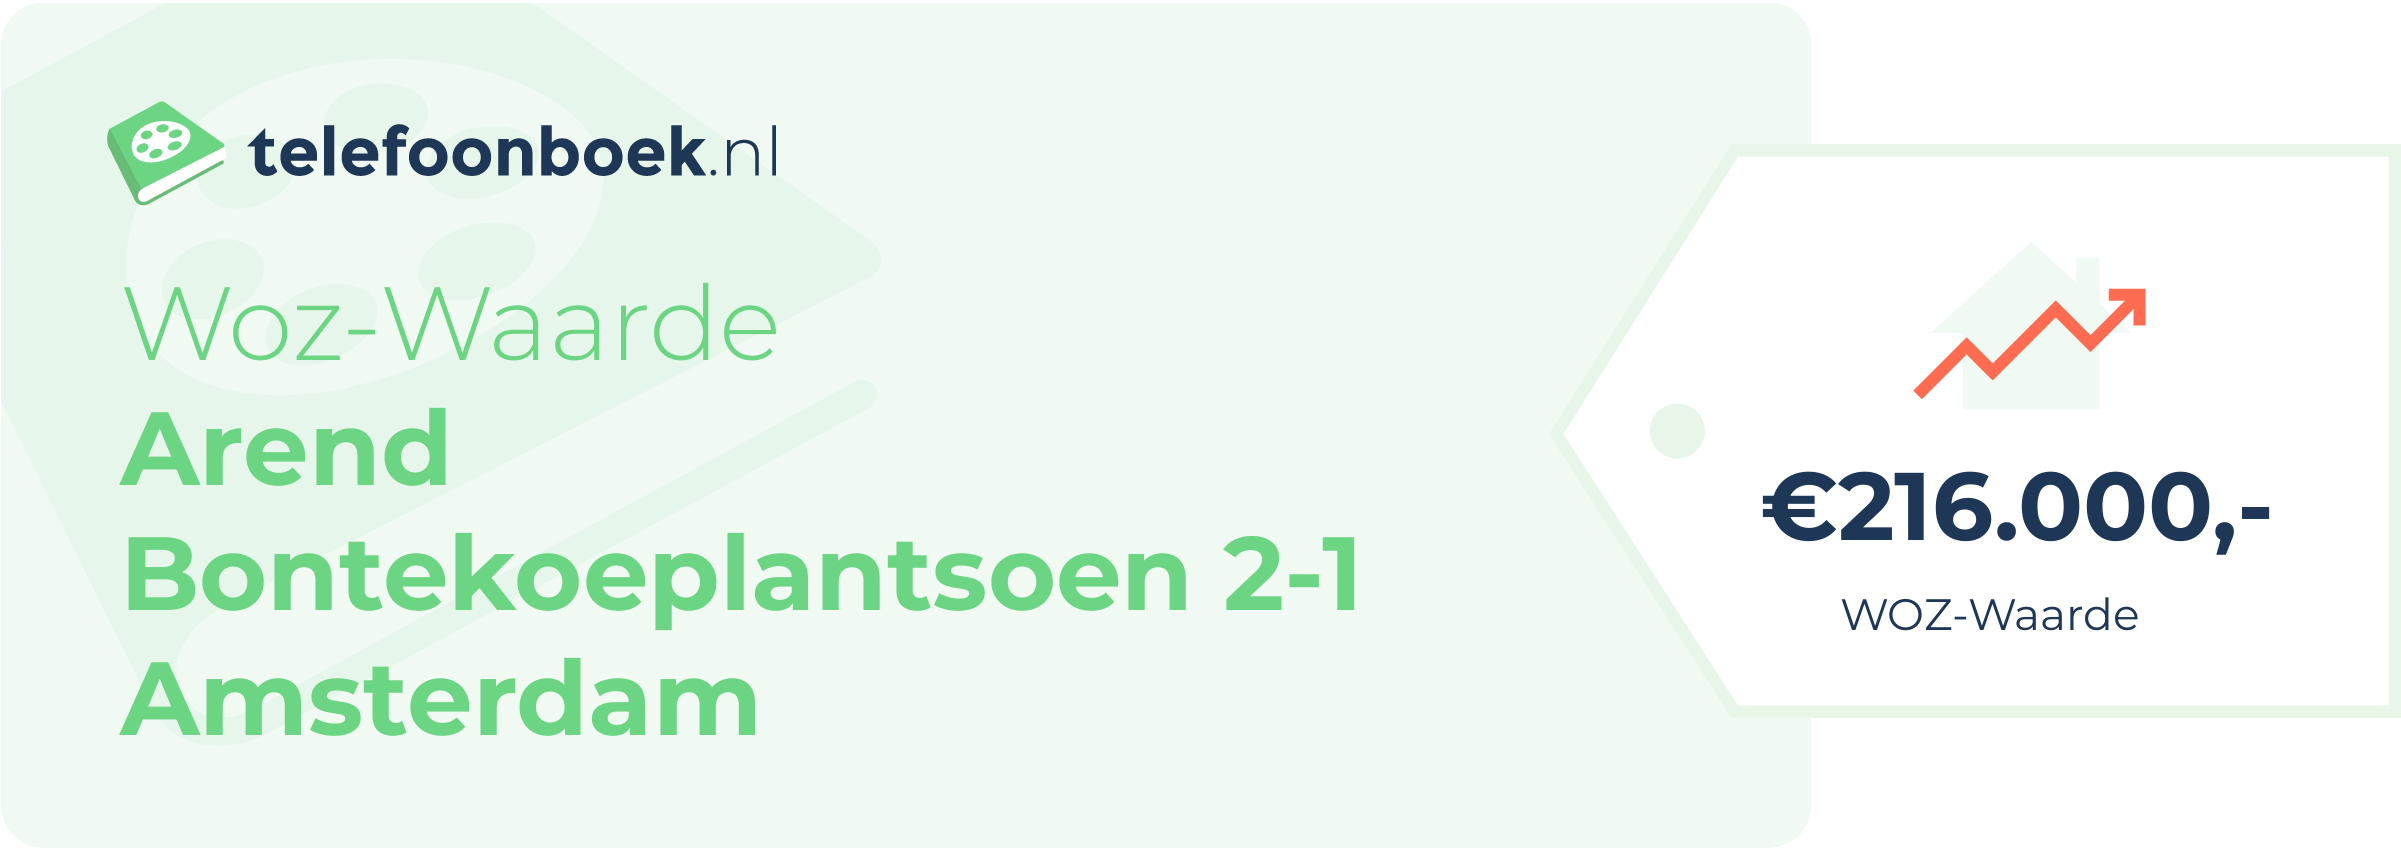 WOZ-waarde Arend Bontekoeplantsoen 2-1 Amsterdam